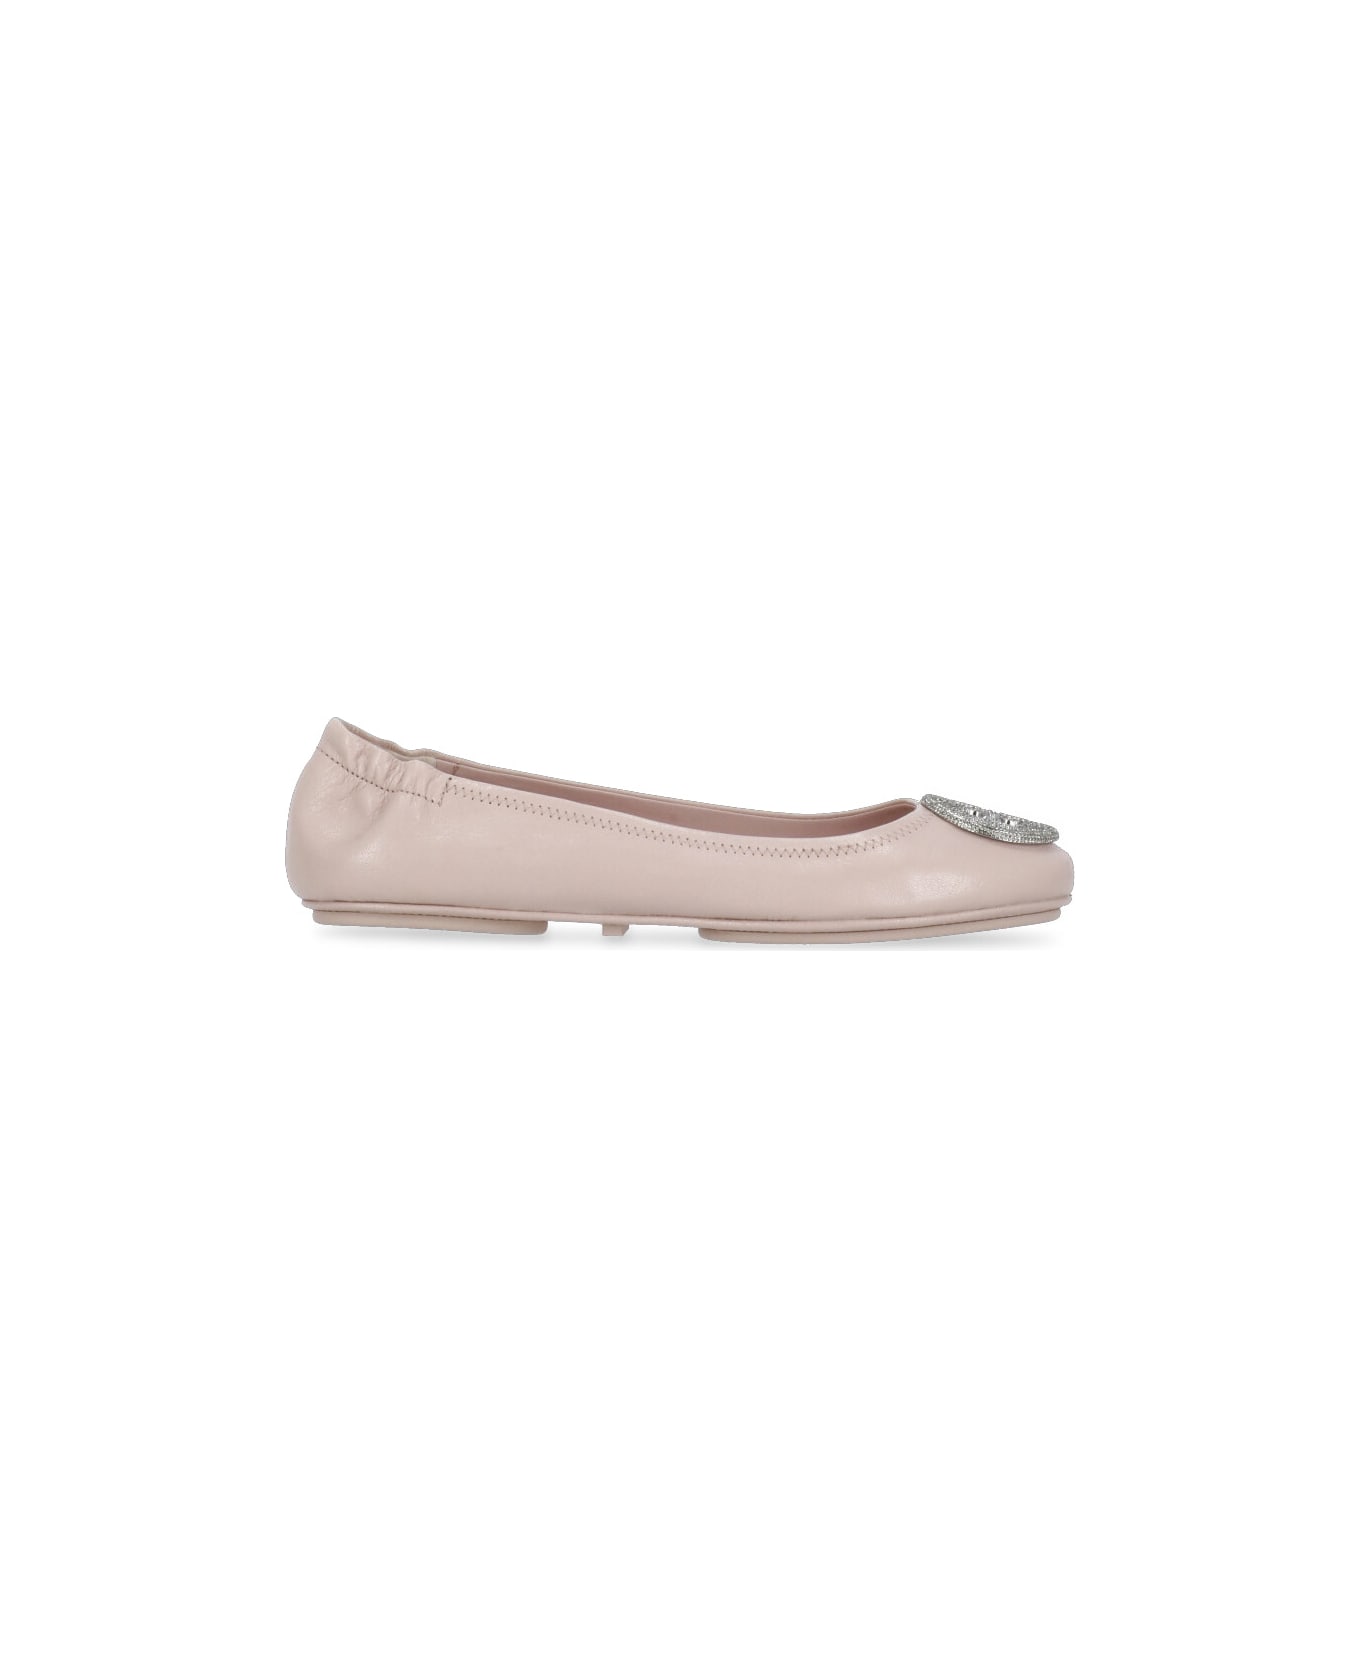 Tory Burch Minnie Ballerina Shoes - Pink